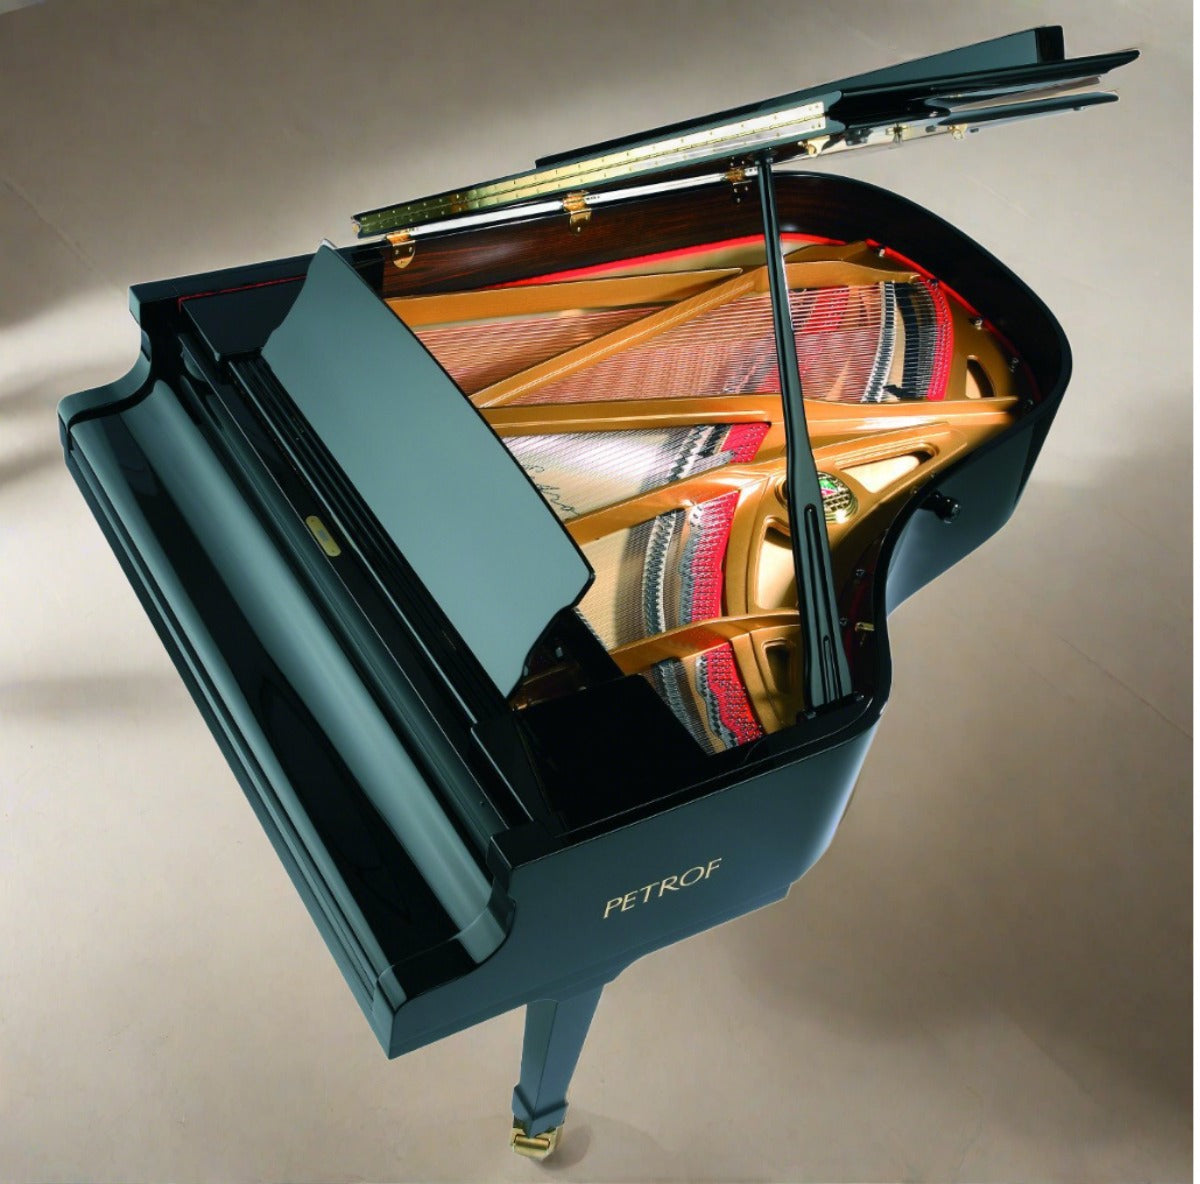 Petrof P 194 Storm 6'3" Grand Piano